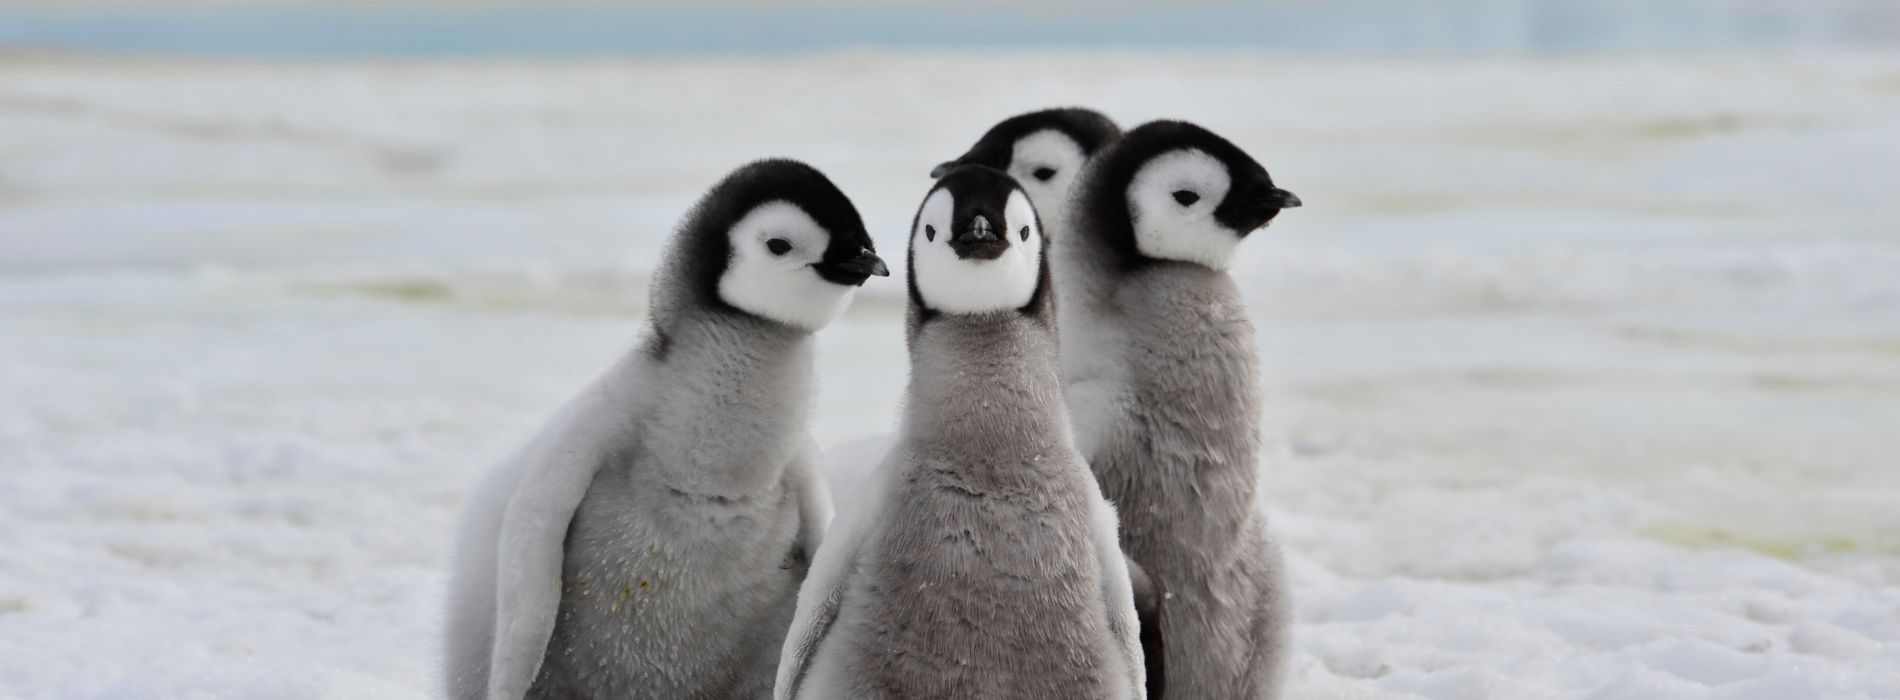 What do penguins represent?